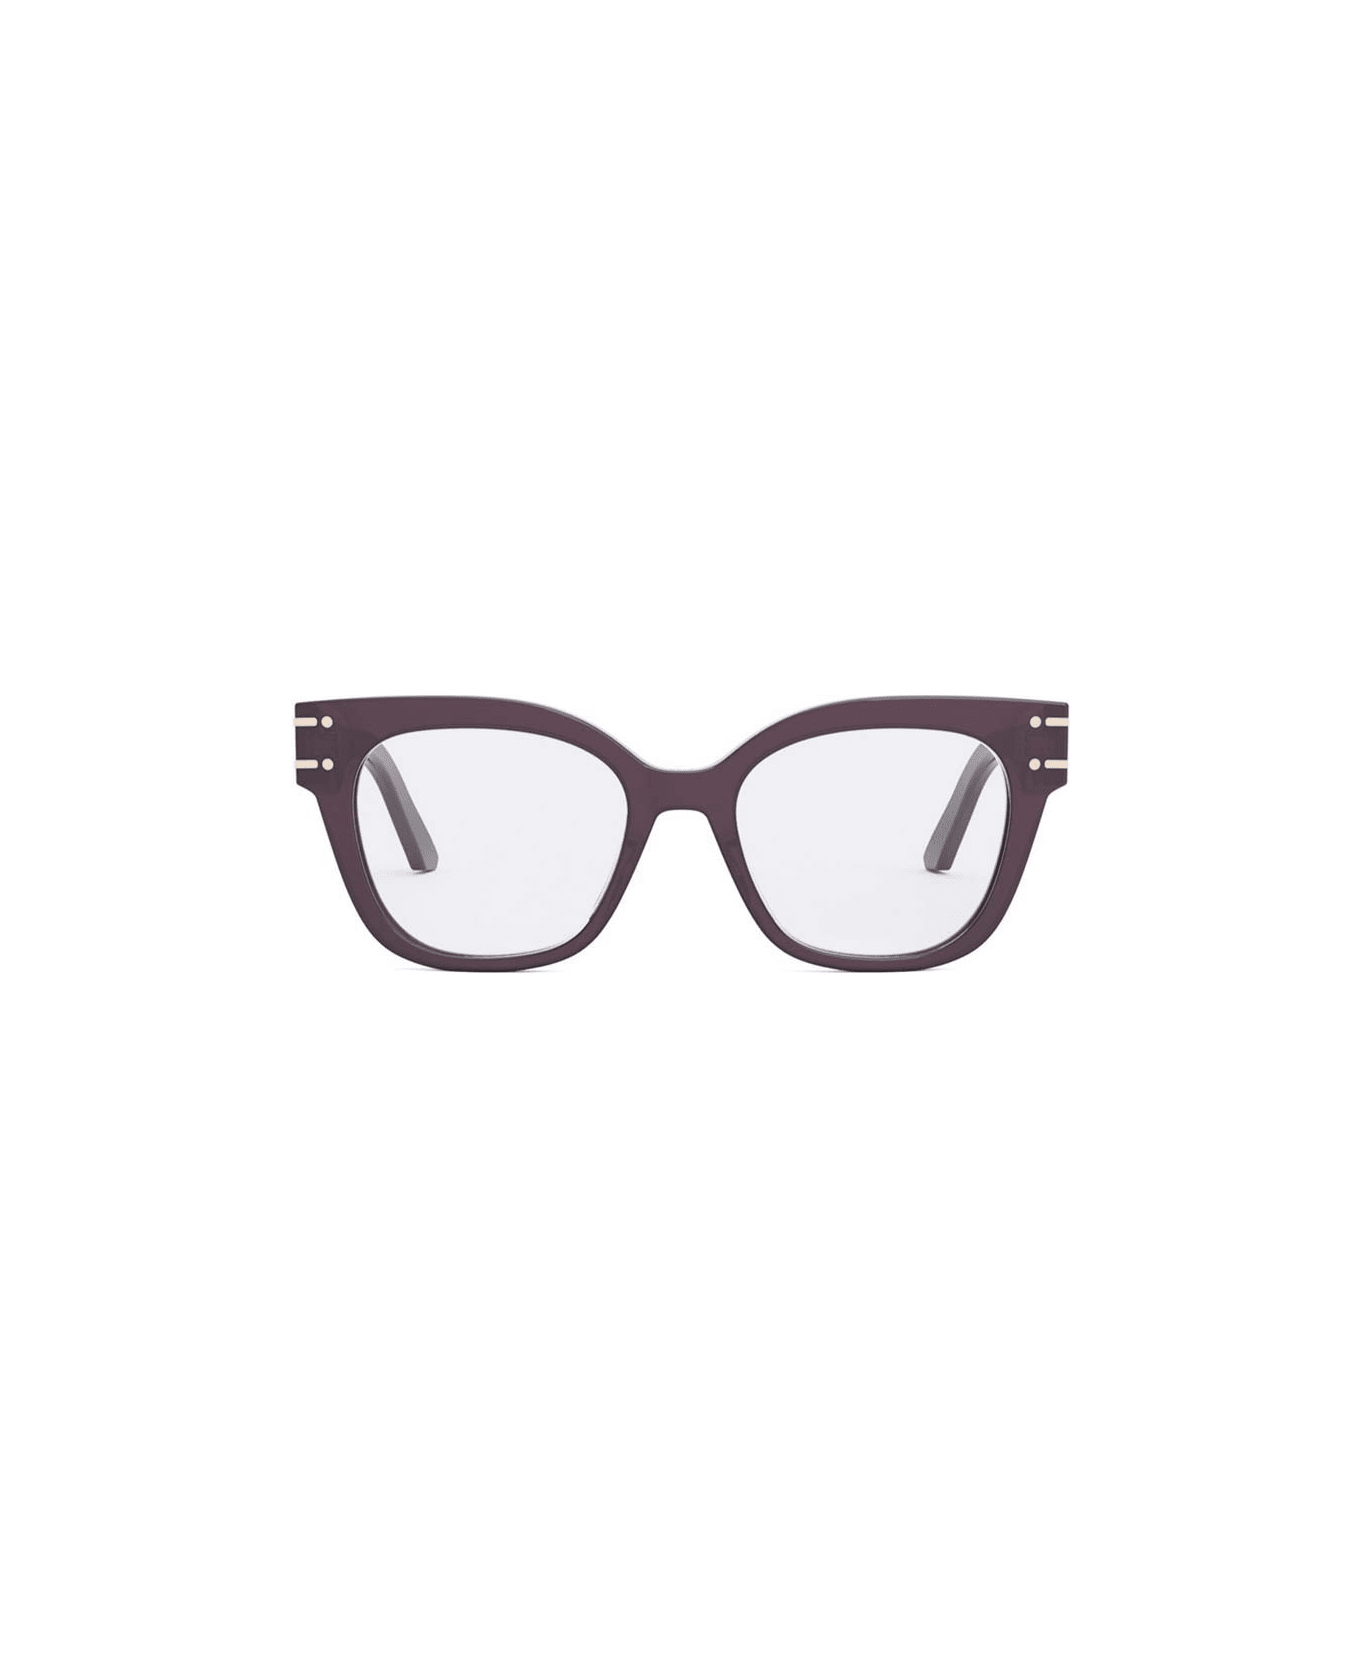 Dior Eyewear Glasses - Burgundy